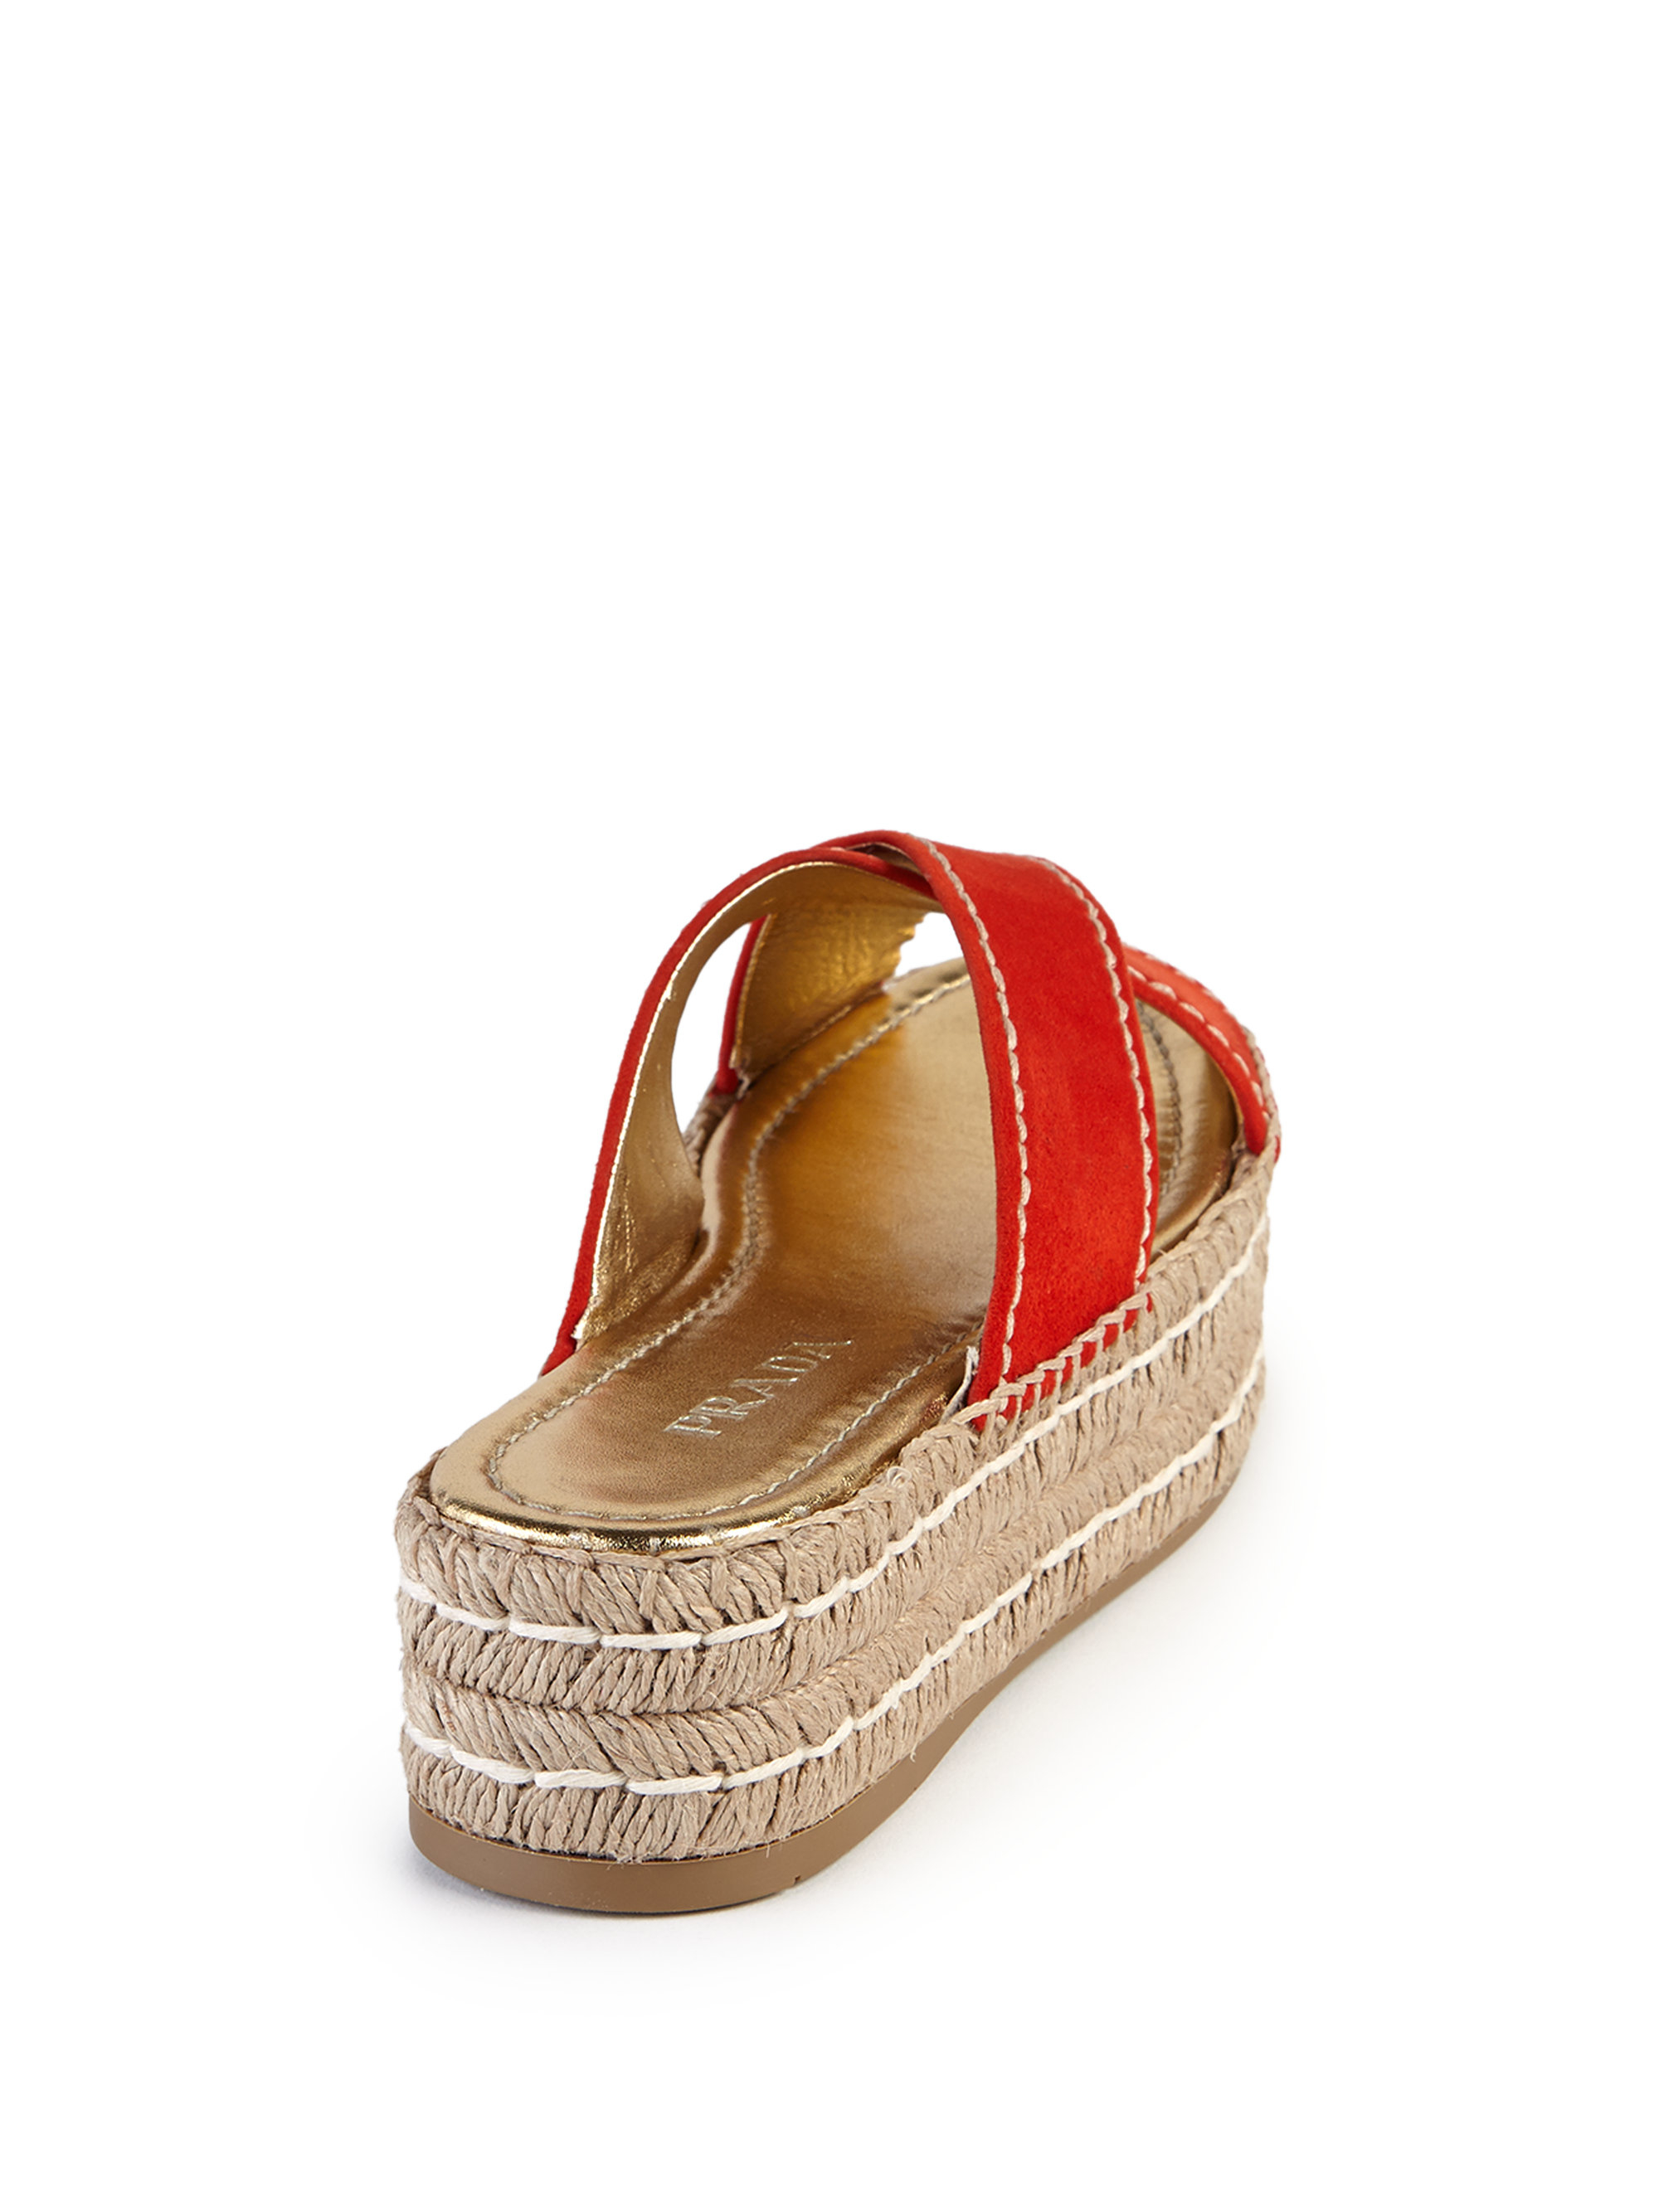 Prada Suede Double Platform Espadrille Slide Sandals in Red | Lyst